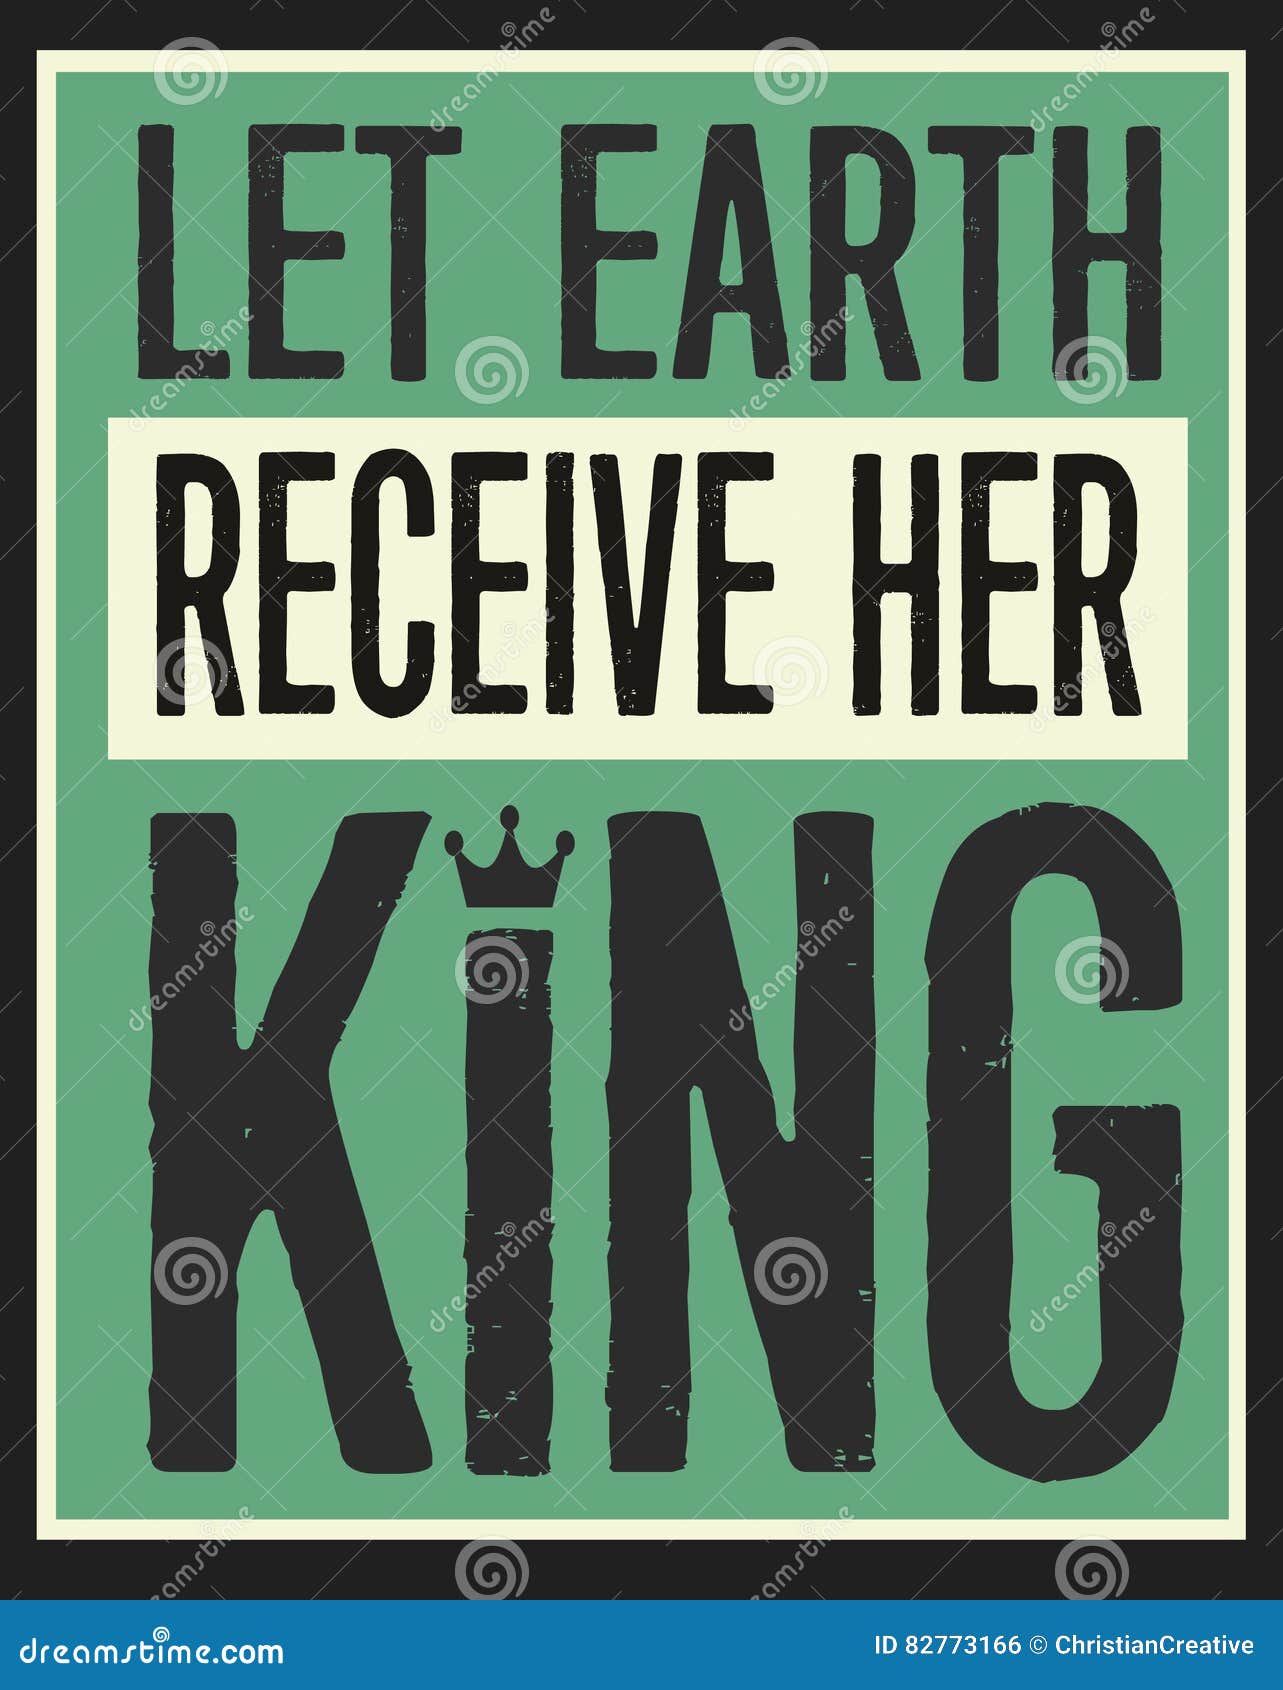 let earth receive her king vintage poster